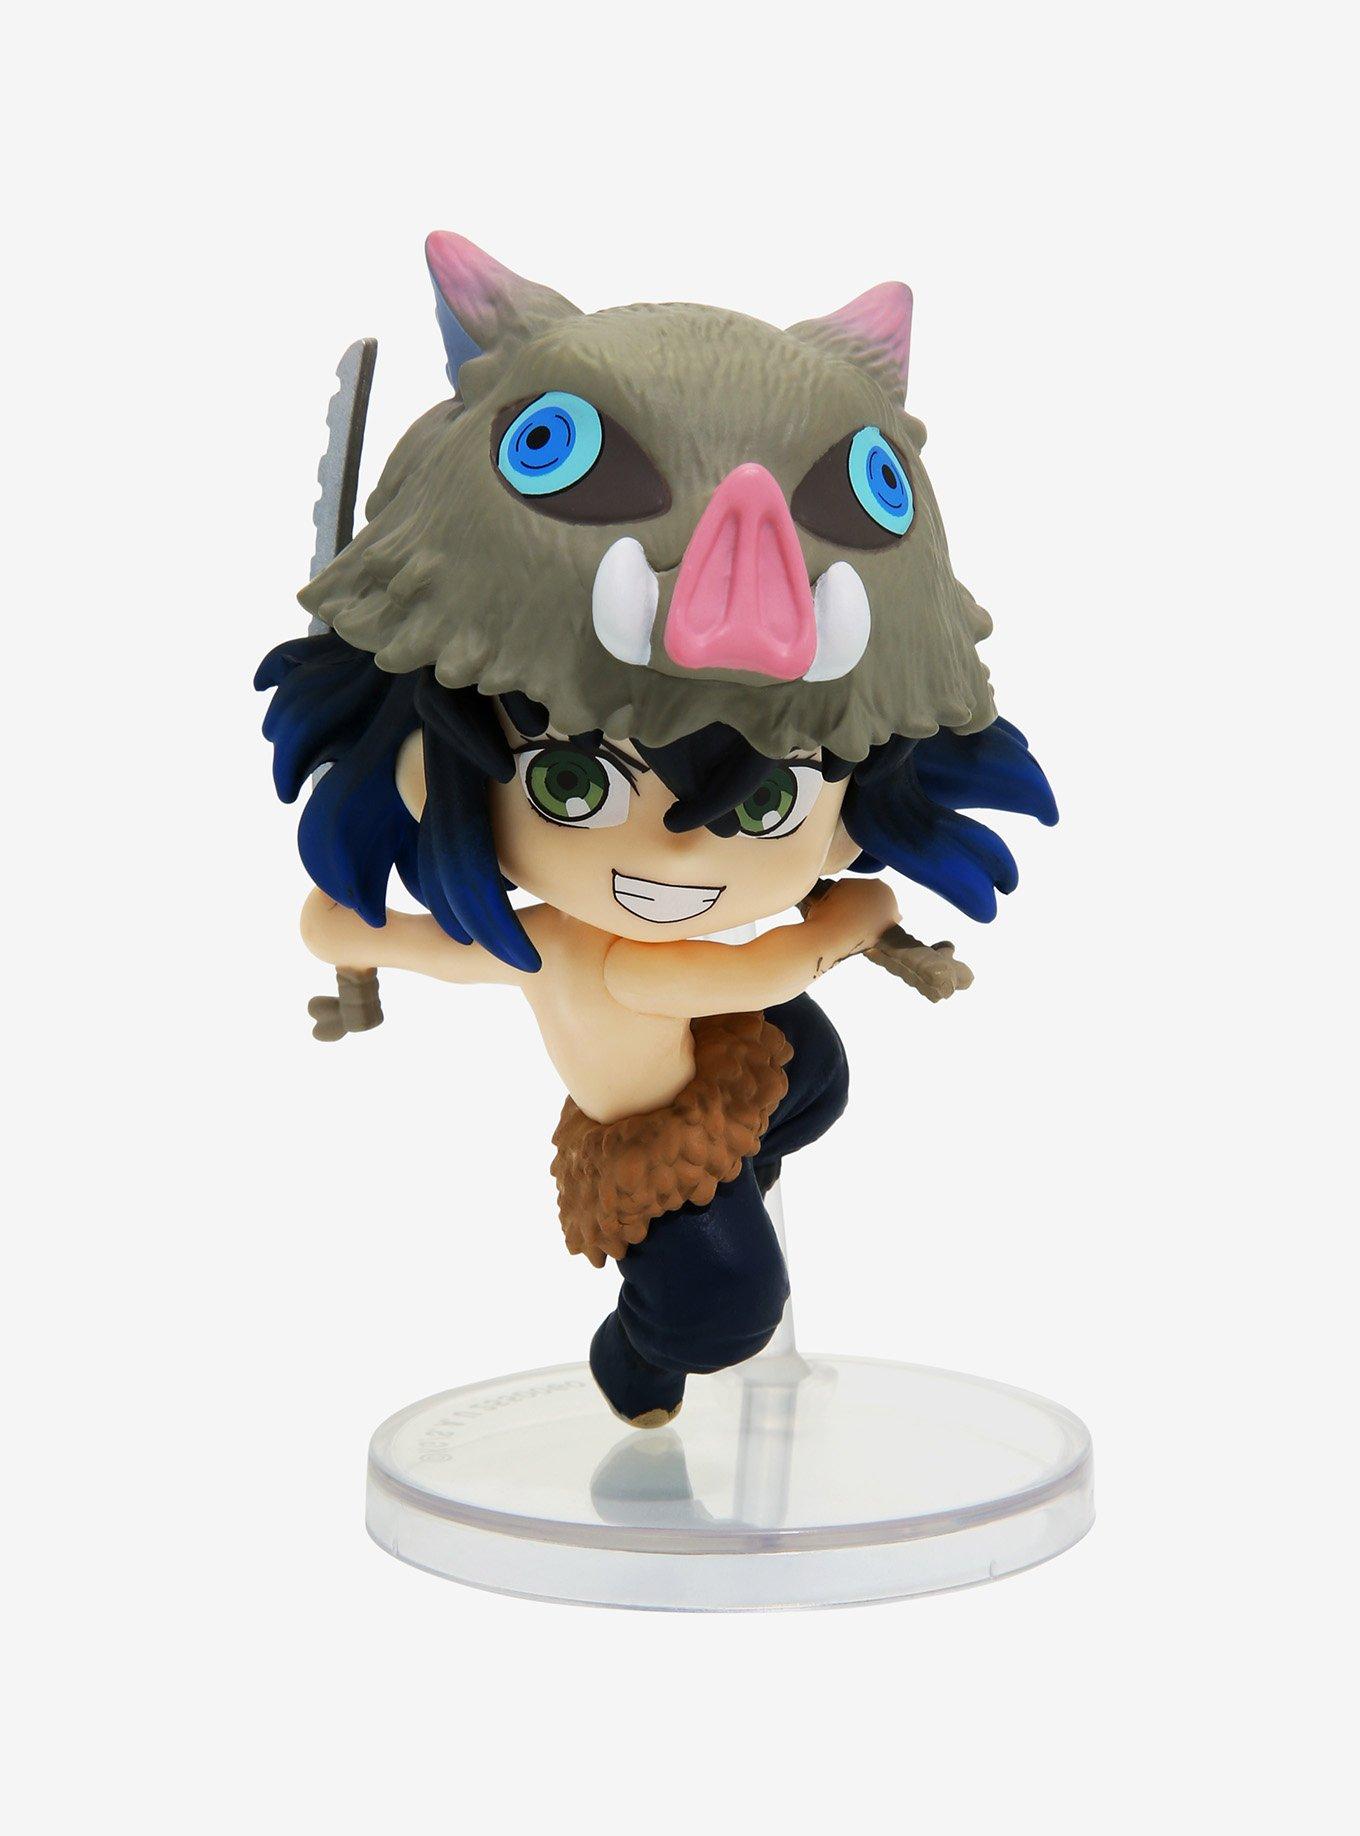 Chibi Masters Bandai Akaza Demon Slayer Figure | 8cm Akaza Anime Figure  from Demon Slayer Anime and Manga | Collectable Anime Merch Figures Make  Great